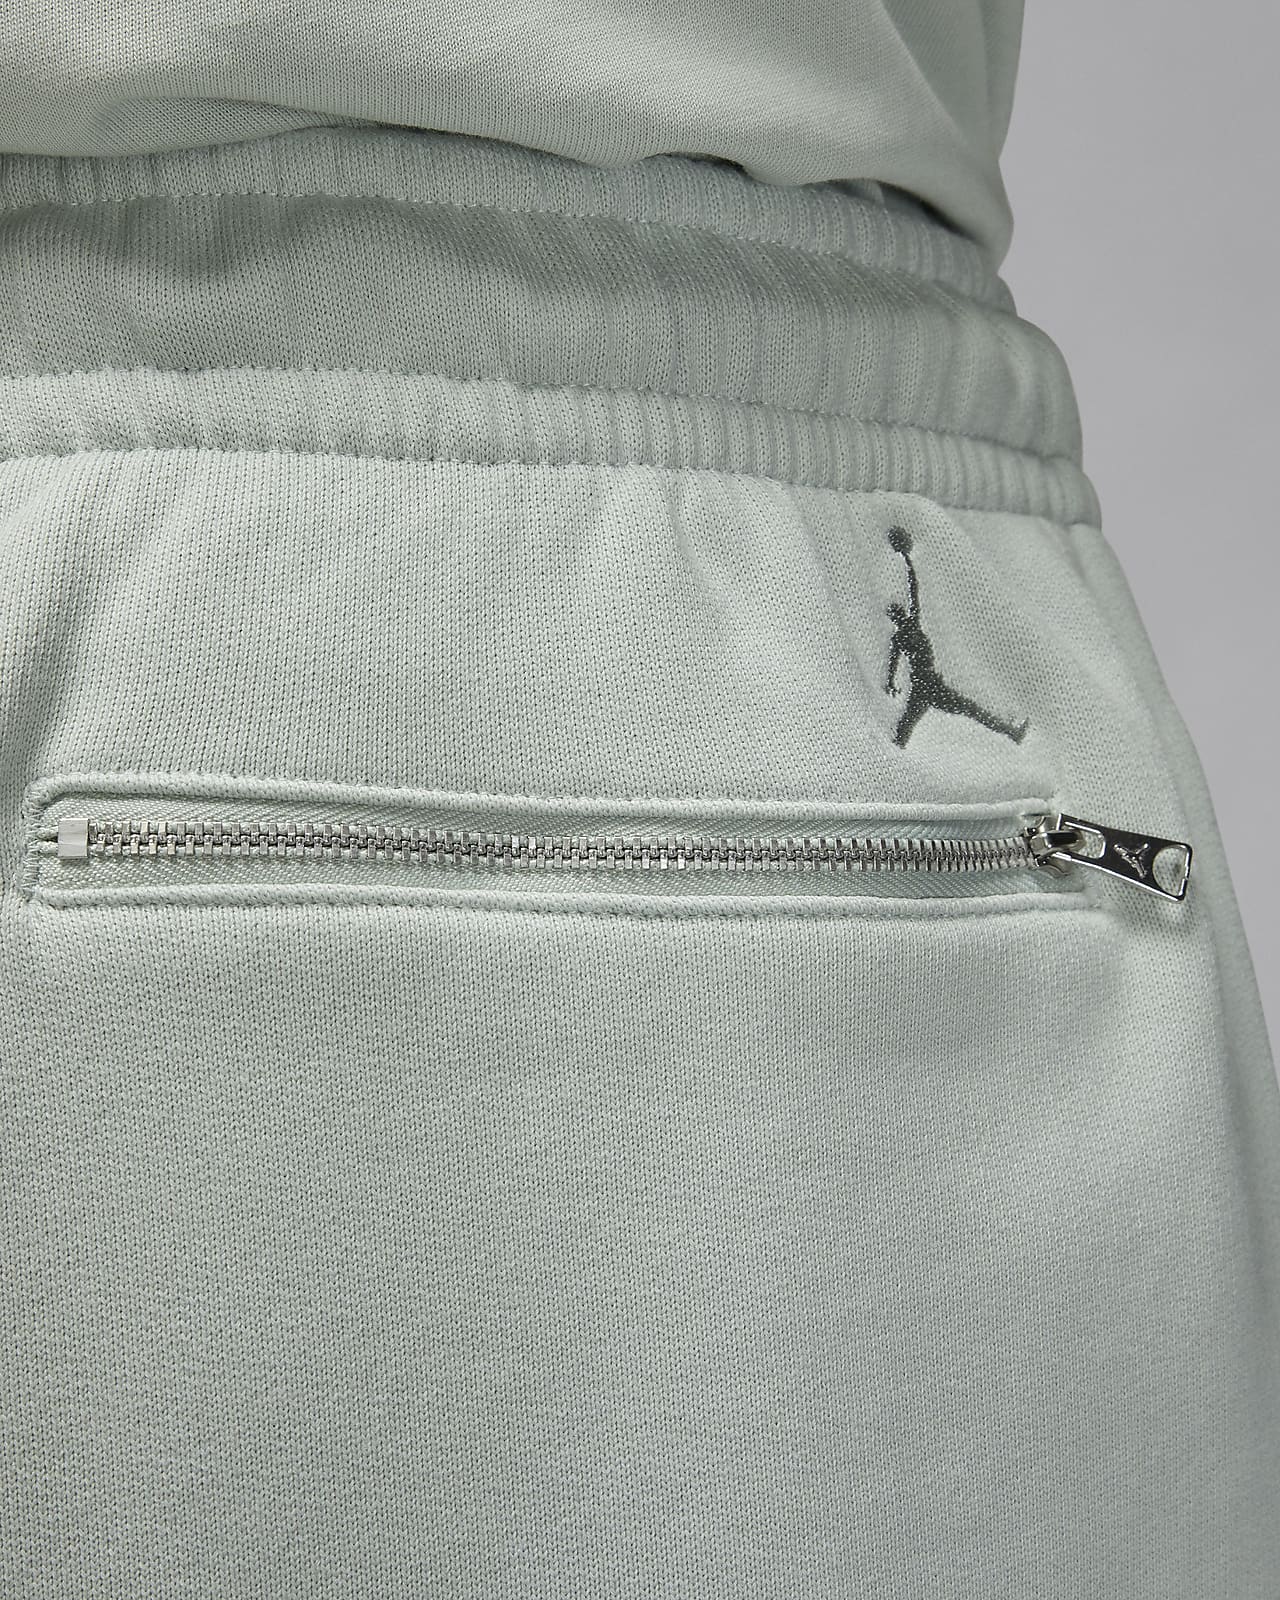 PUMA Men's Essential+ Embroidery Logo Fleece Sweatpants